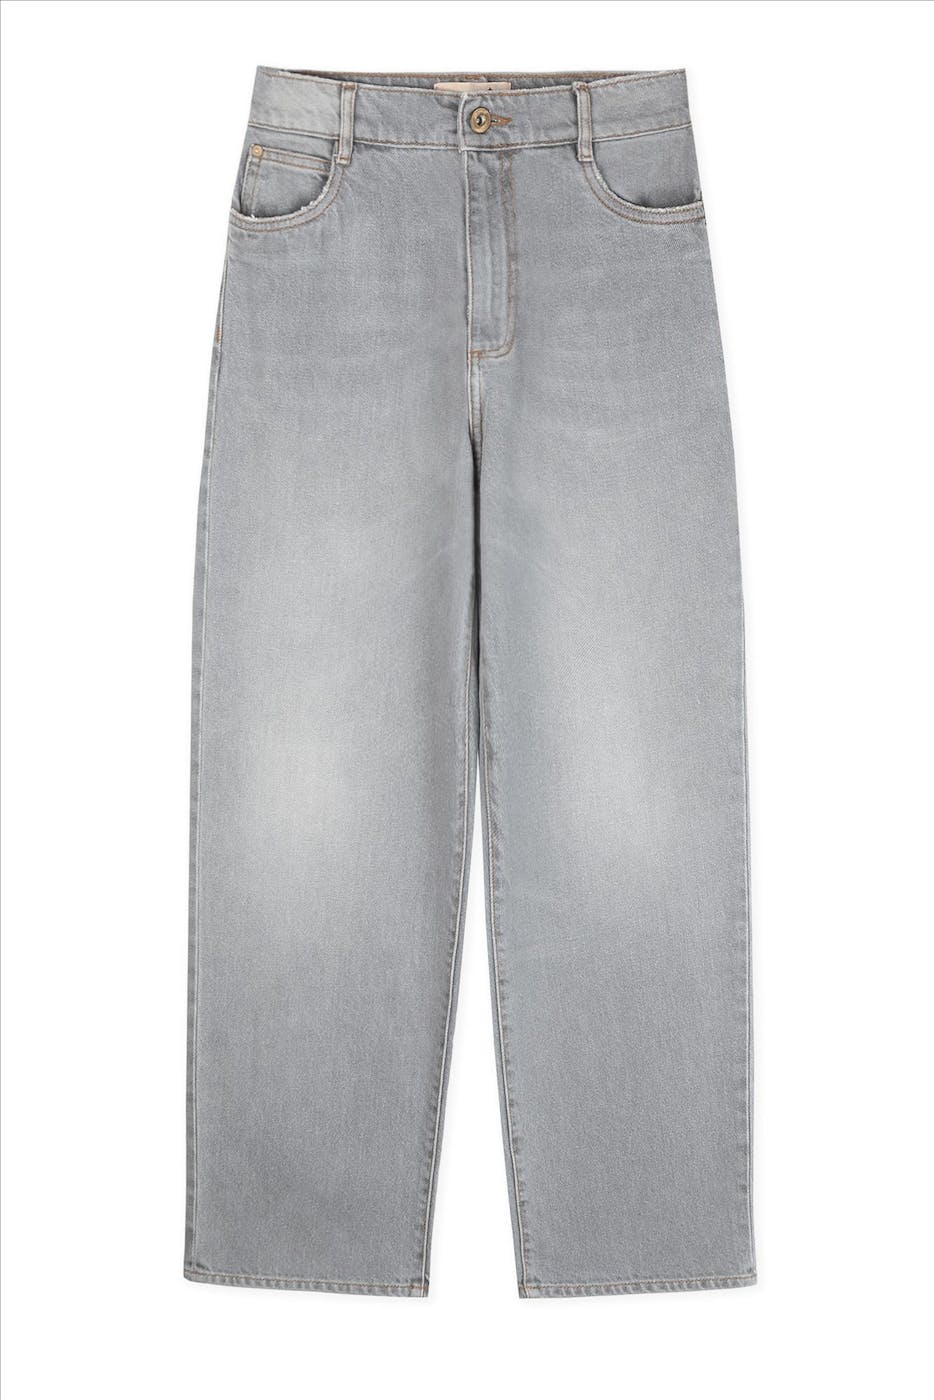 Sessùn - Grijze Bay Cruise straight jeans